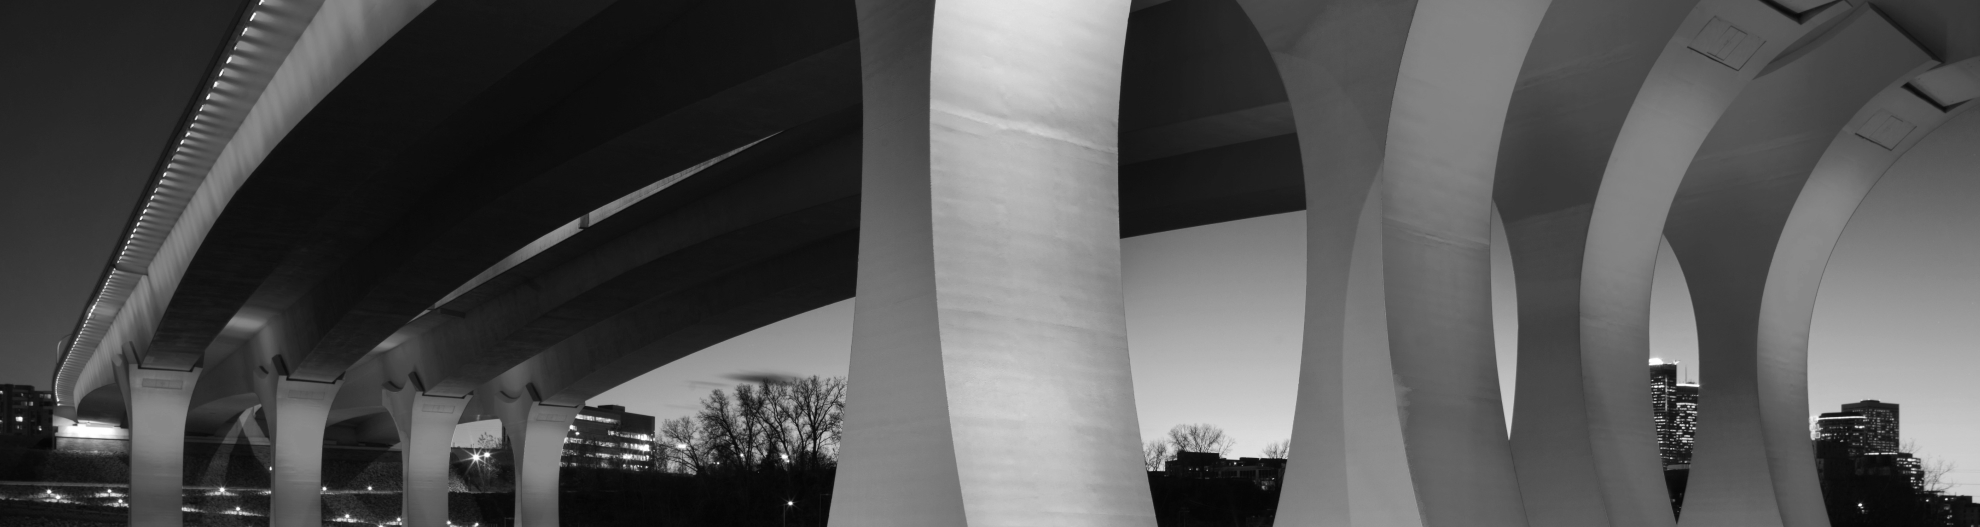 Rebuilt 35w bridge in Minneapolis, Minnesota